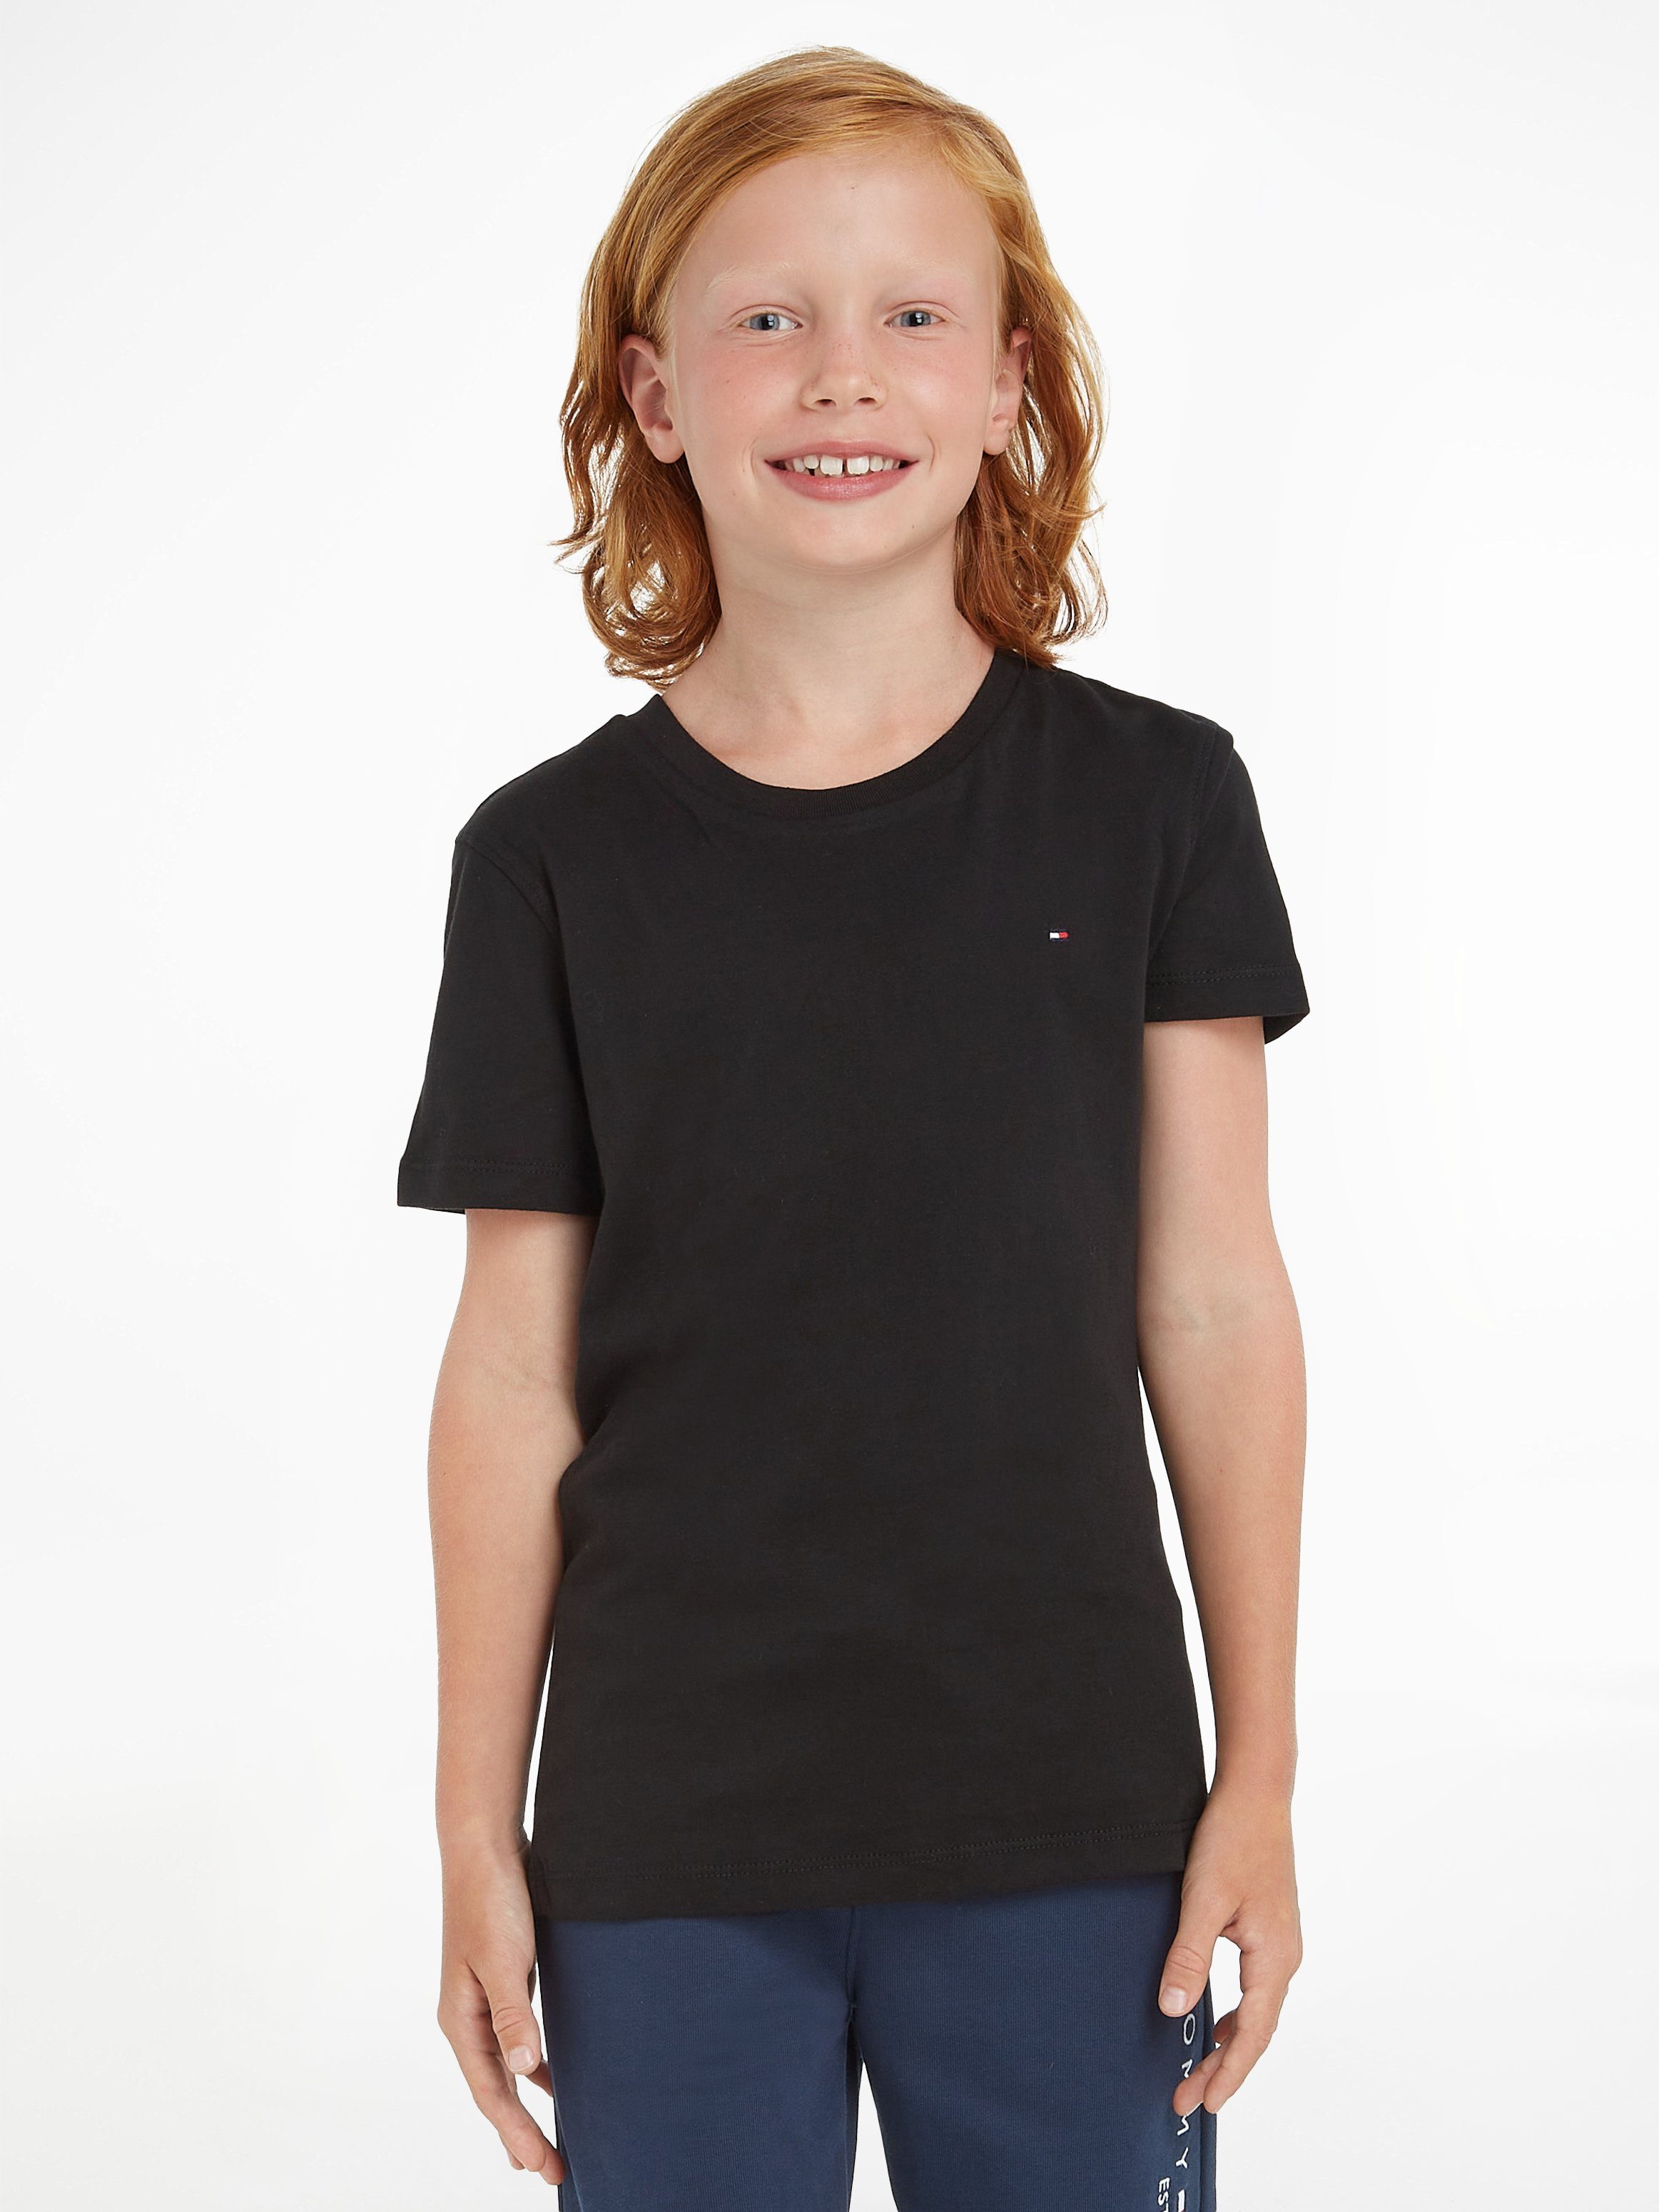 Tommy Hilfiger T-Shirt BOYS BASIC CN KNIT Kinder Kids Junior MiniMe,für Jungen | T-Shirts